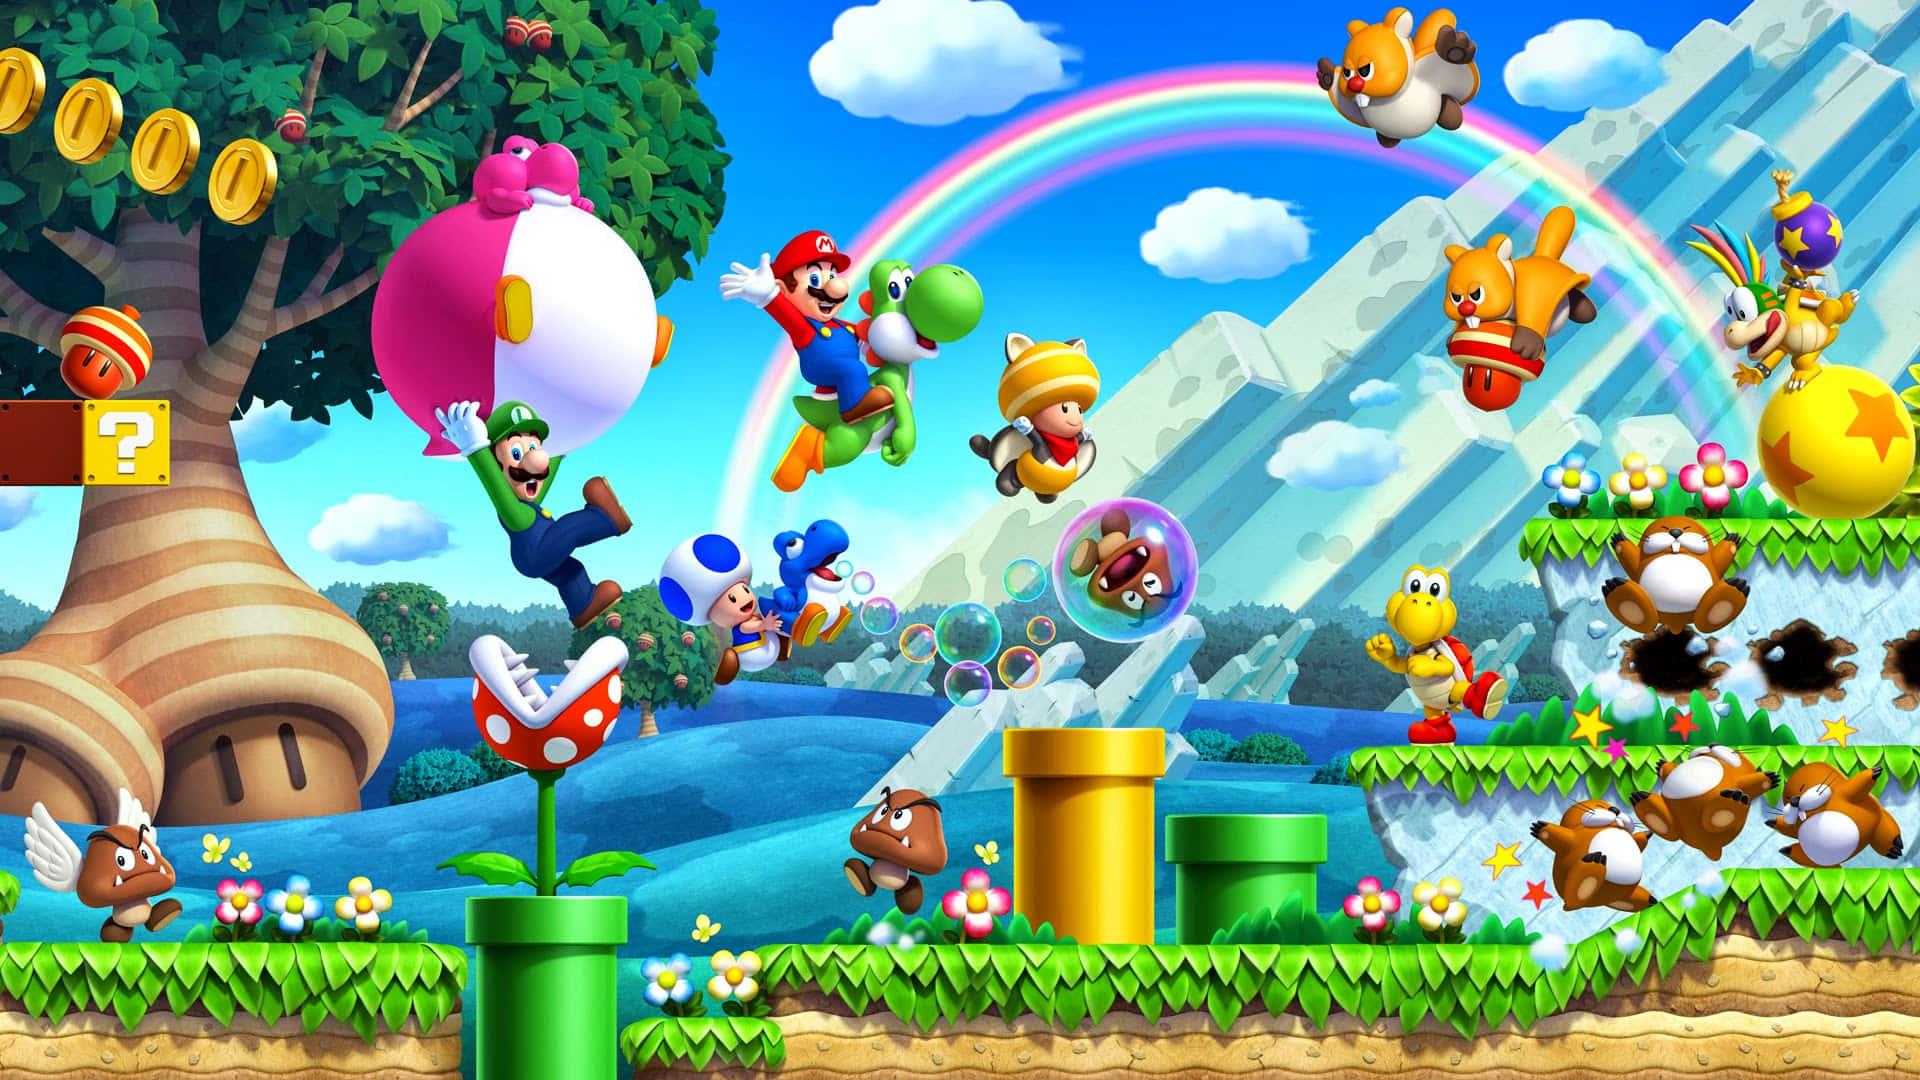 Super Mario Bros 2 Characters in Action Wallpaper